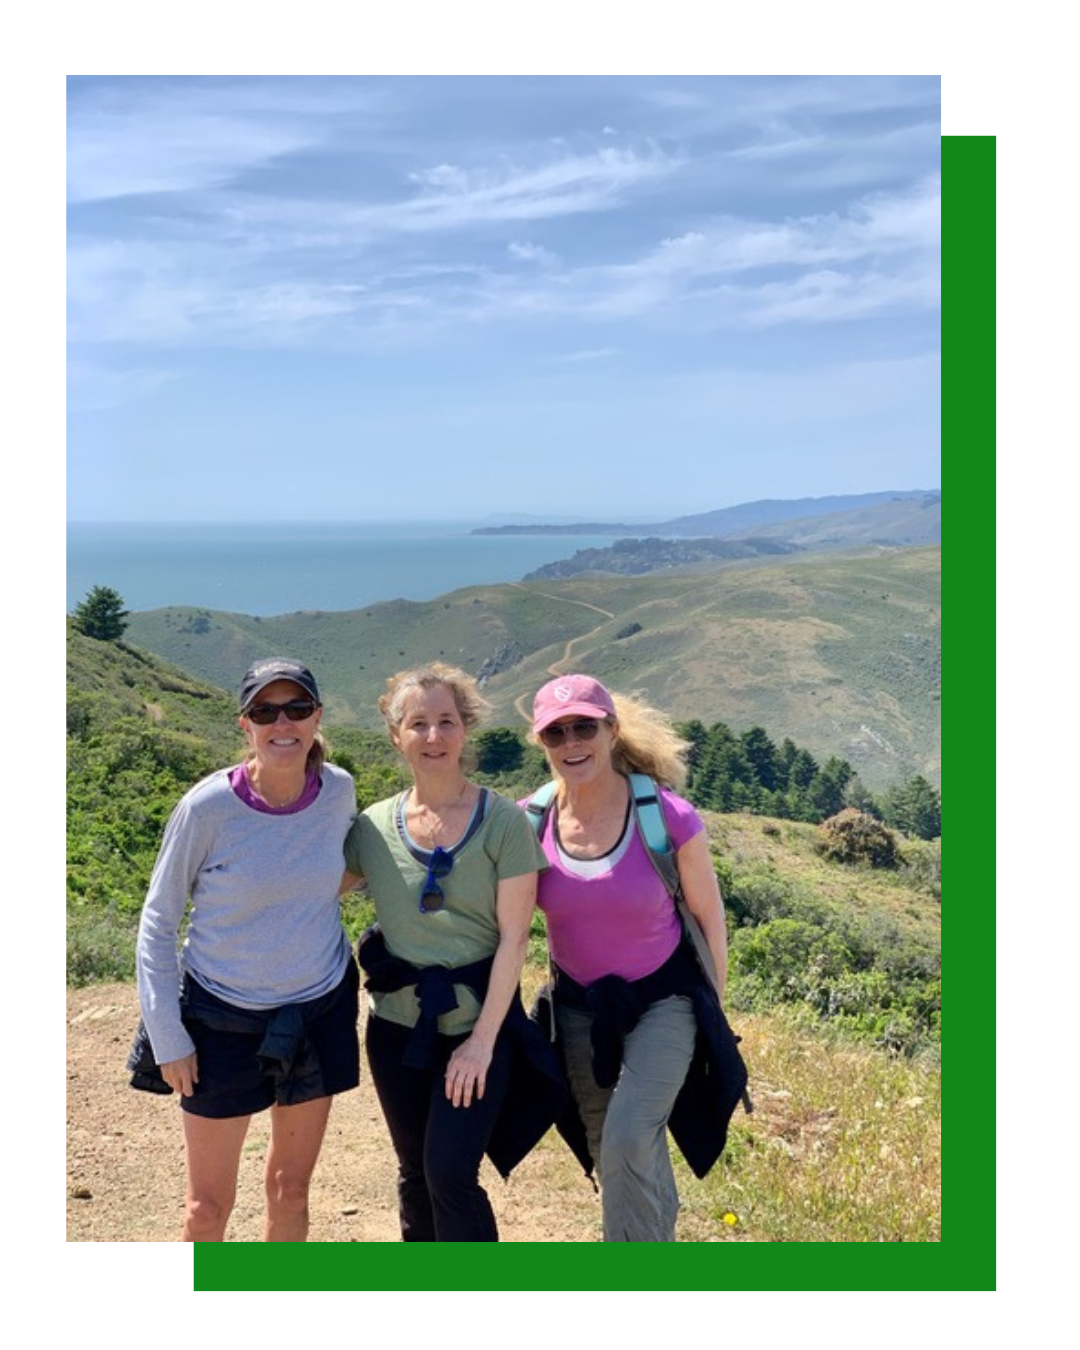 Greener Plate Challenge Team hiking outdoors